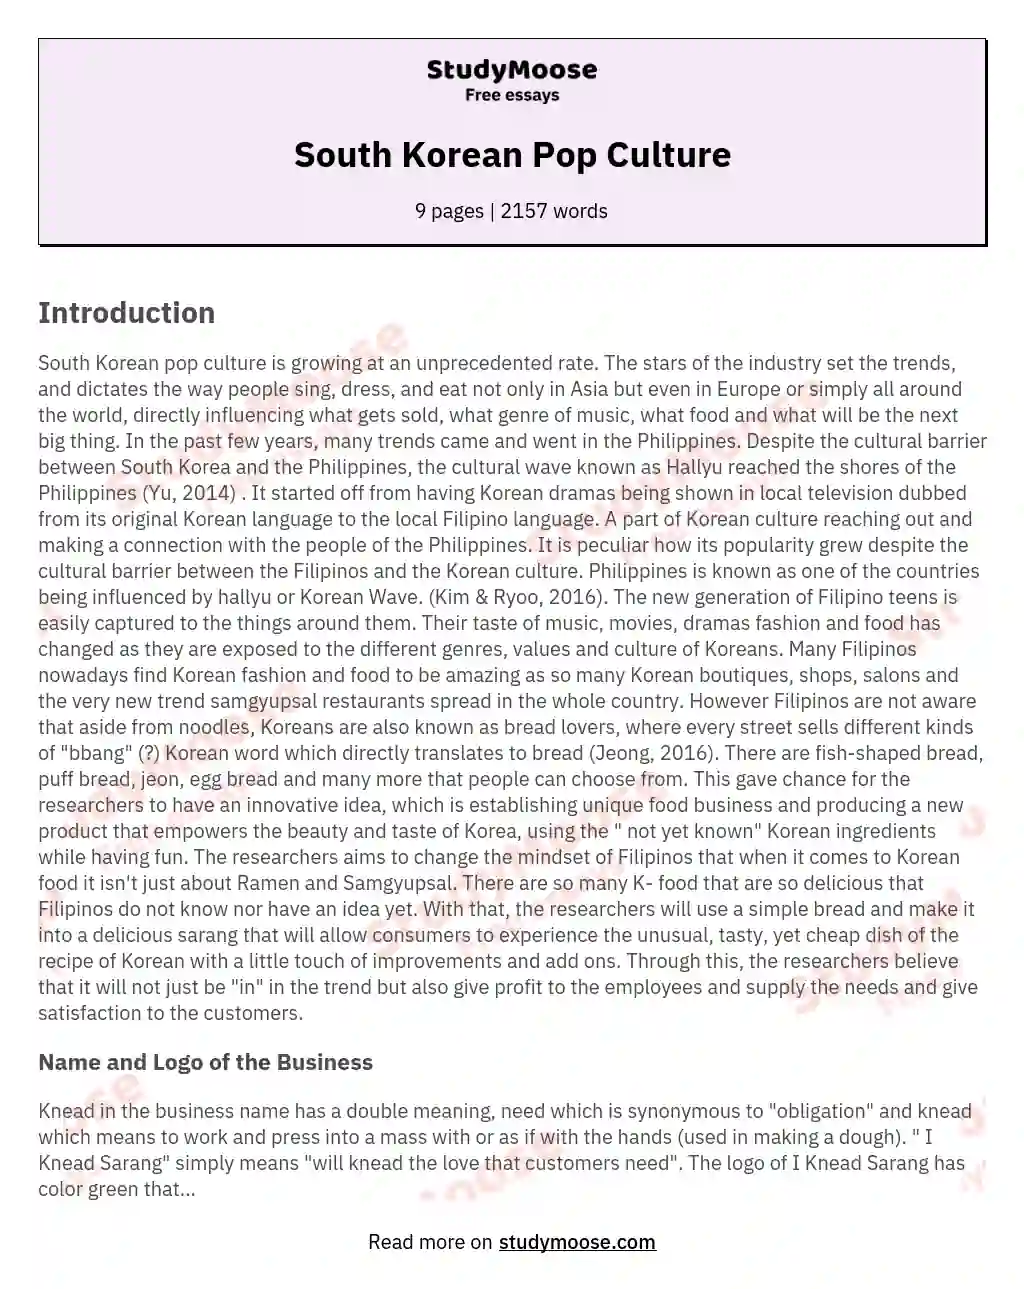 South Korean Pop Culture essay